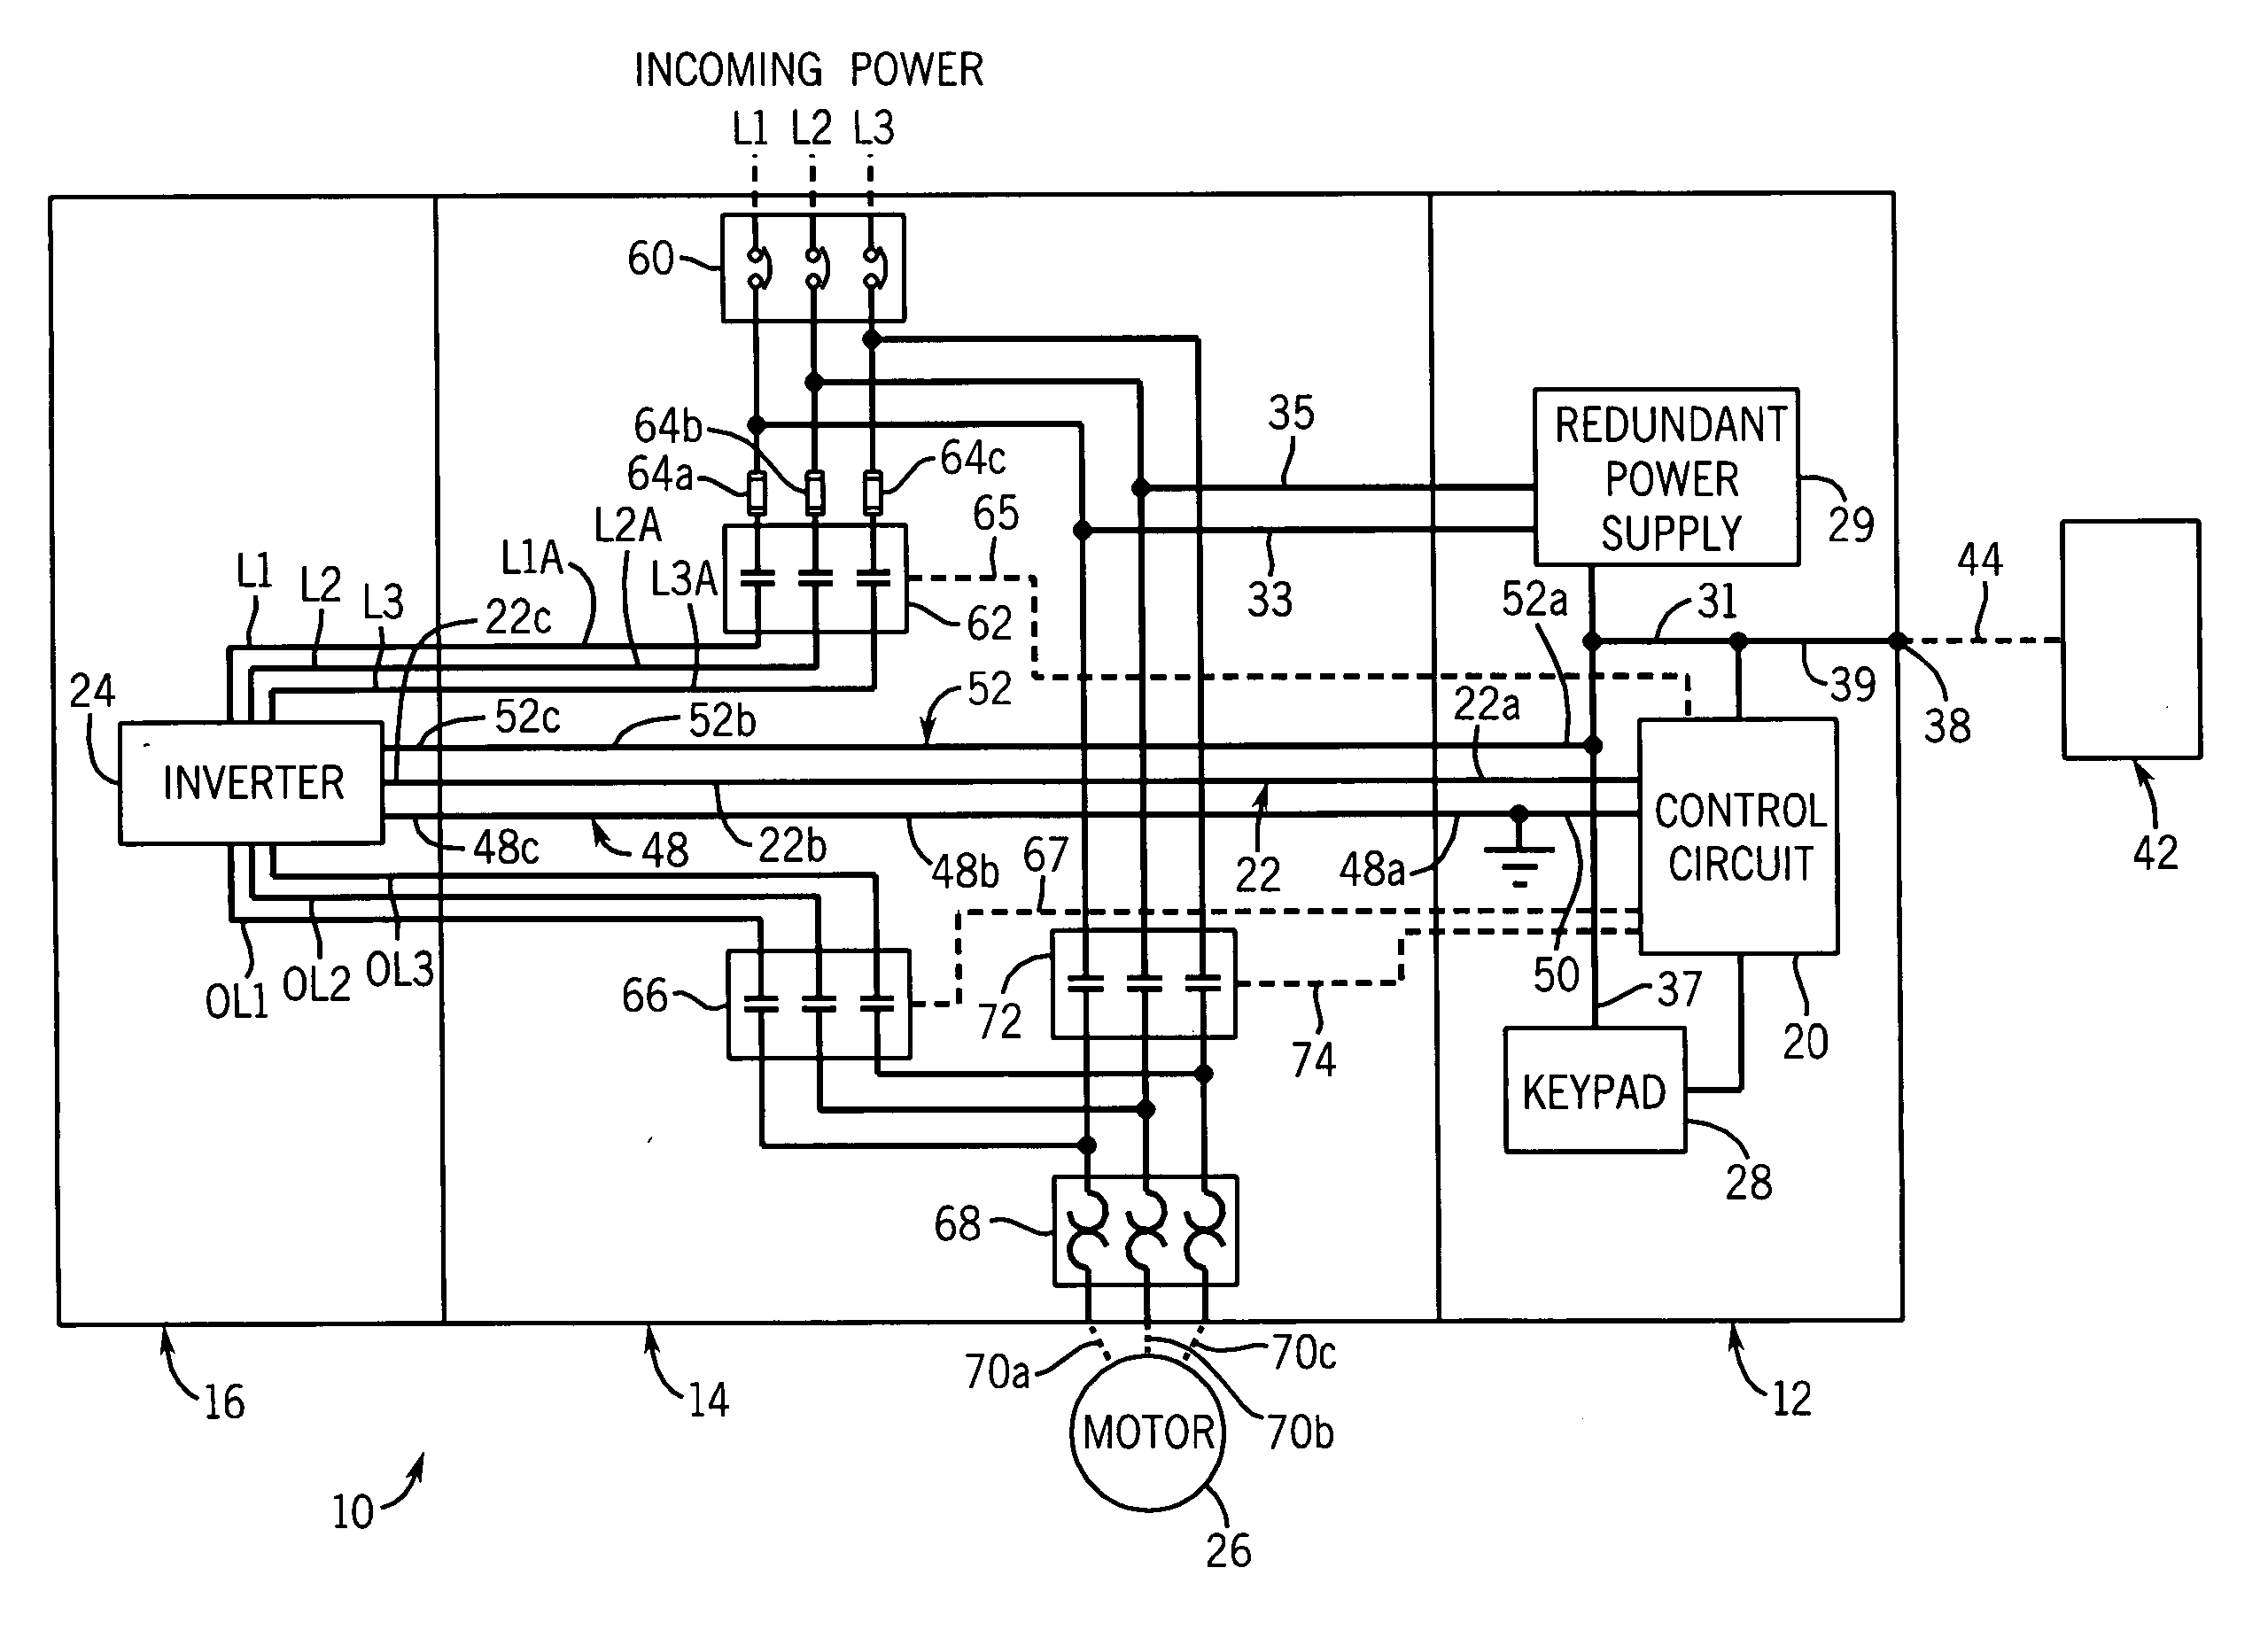 Modular control system for an AC motor